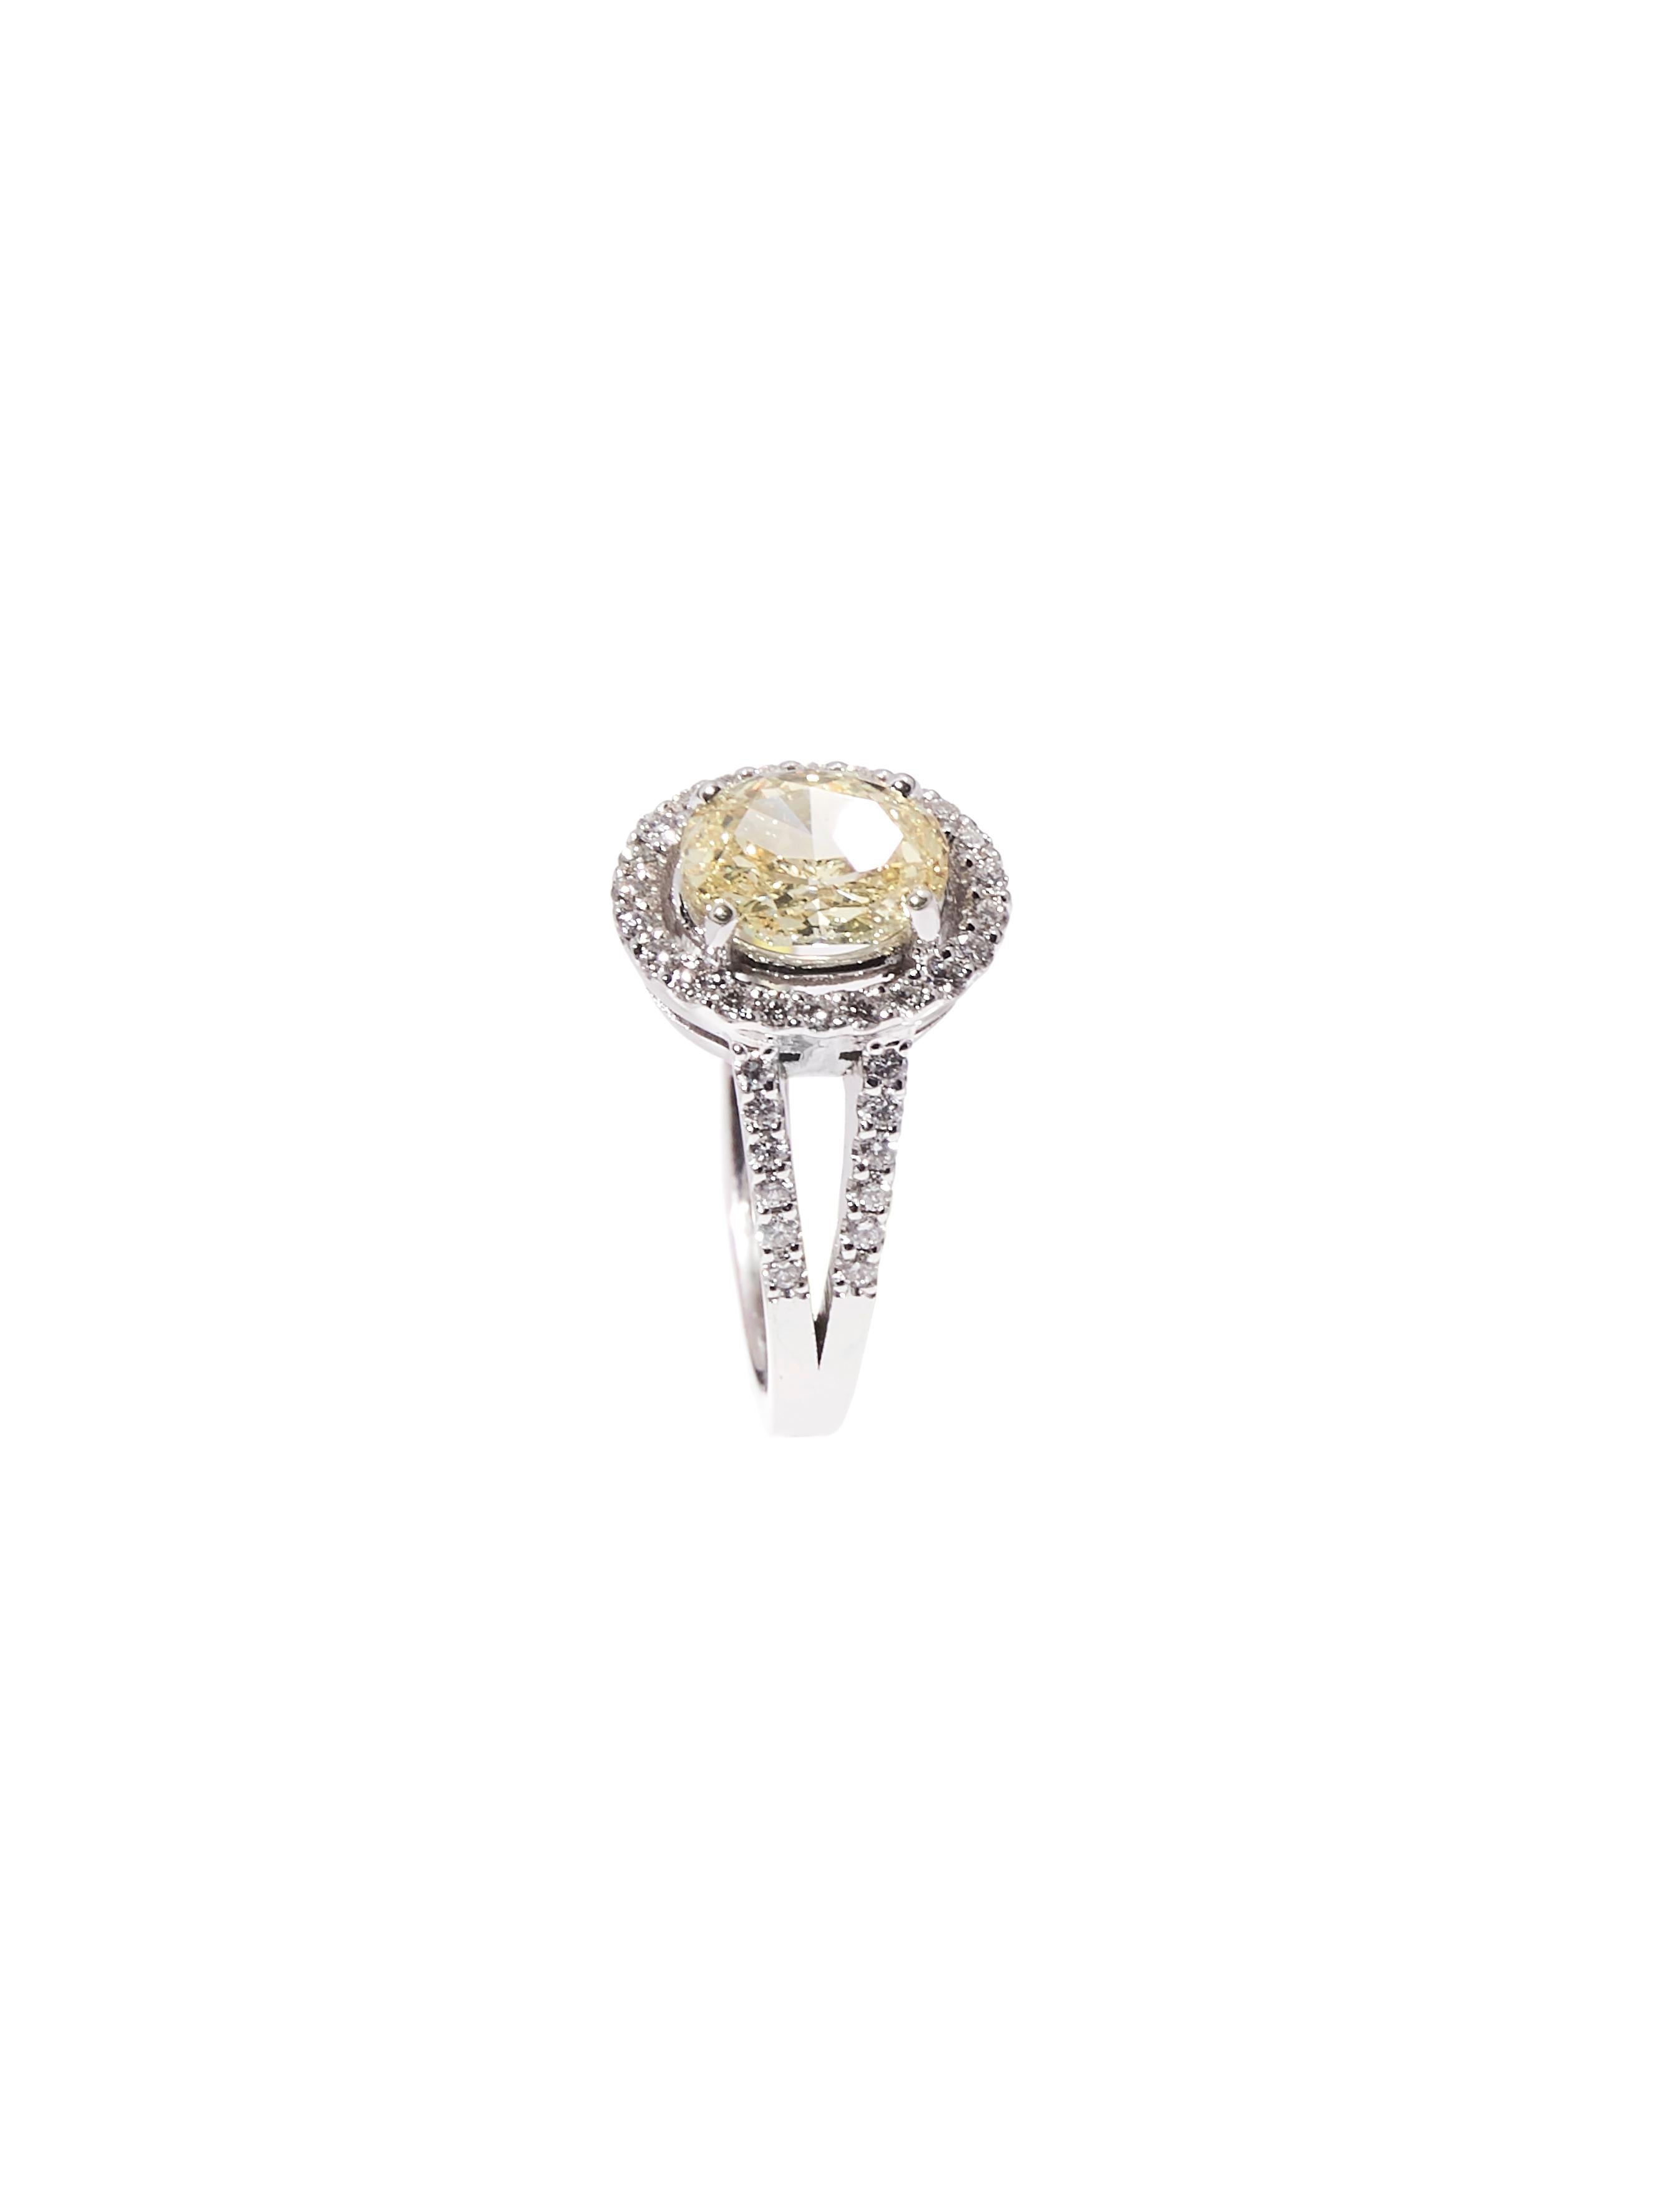 1.96 Fancy Yellow Natural Diamond GIA Certificate White Gold Diamond Halo Ring 1